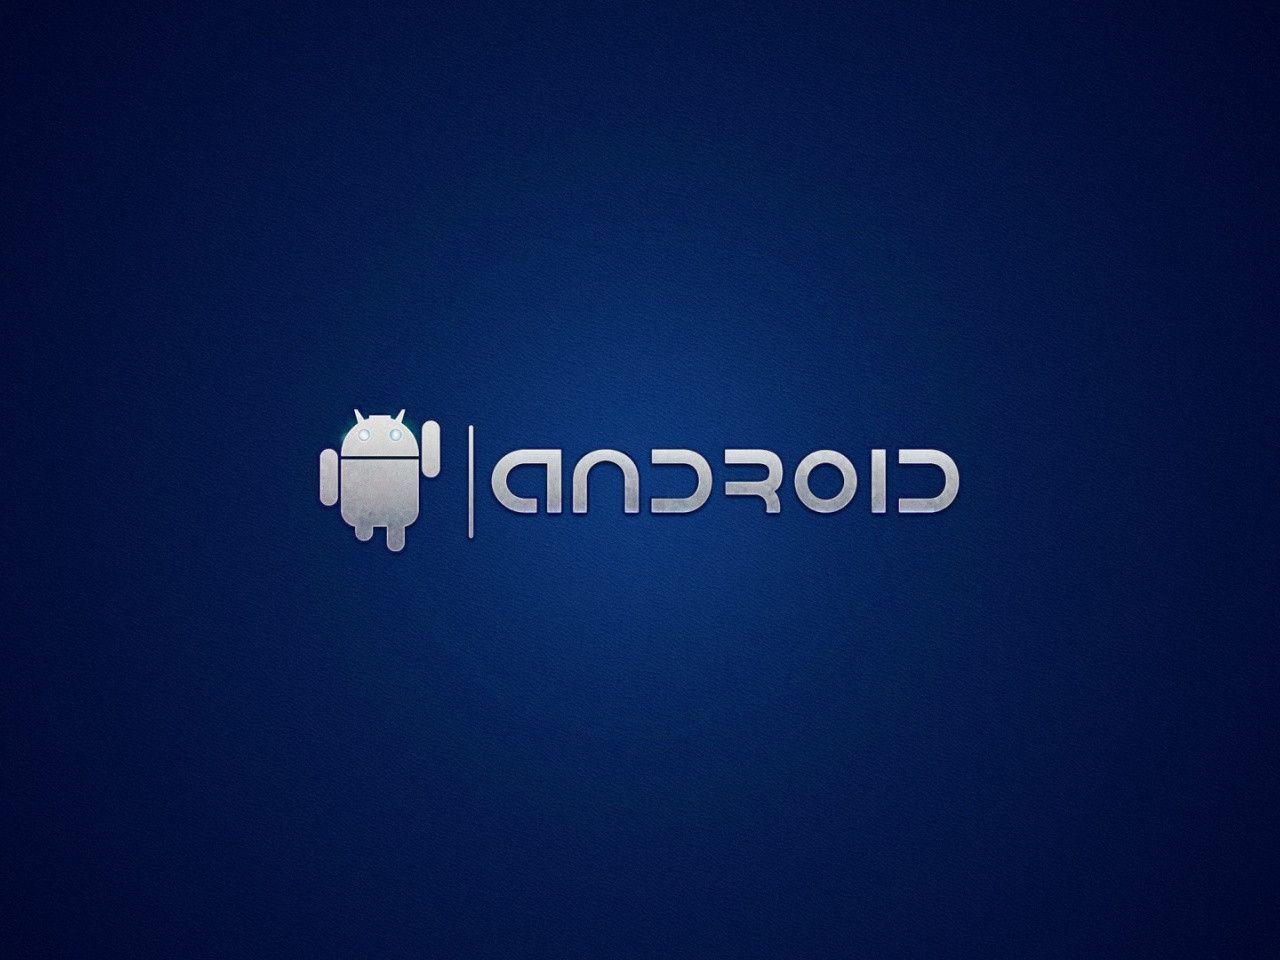 Android Wallpaper Blue 1280x960 Wallpaper. photofullhd